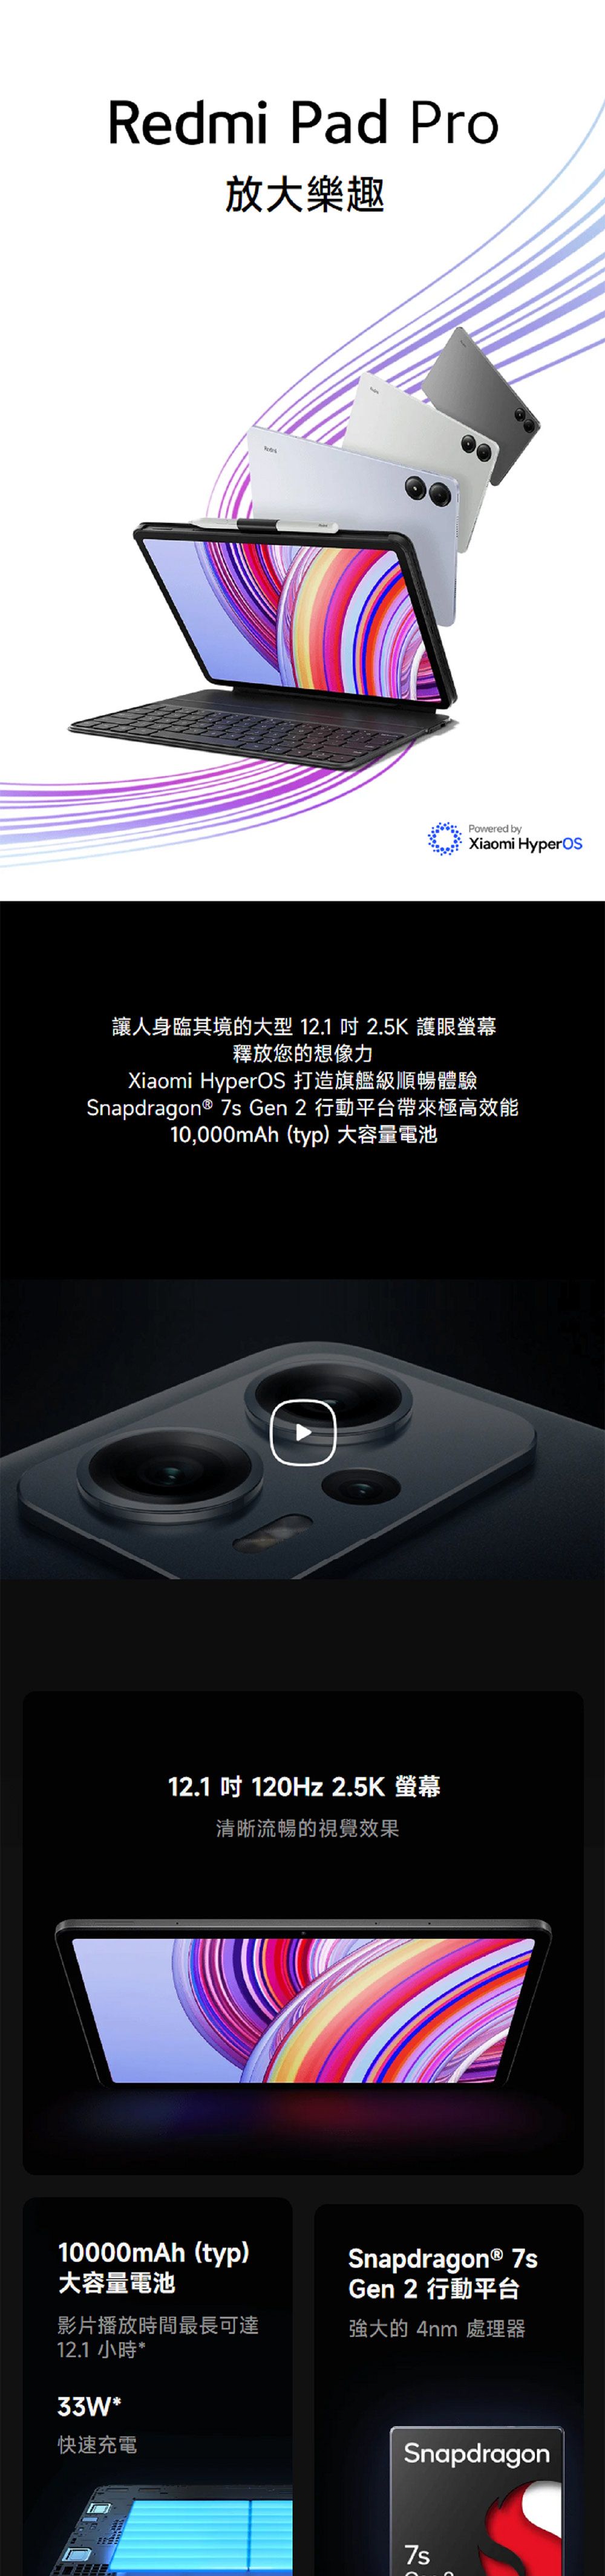 Redmi Pad Pro放大樂趣Powered byXiaomi HyperOS讓人身臨其境的大型 12.1  2.5K 護眼釋放您的想像力Xiaomi HyperOS 打造旗艦級順暢體驗Snapdragon®  Gen 2 行動平台帶來極高效能10,000mAh(typ)大容量電池12.1 120Hz 2.5K 螢幕清晰流暢的視覺效果10000mAh(typ)大容量電池影片播放時間最長可達12.1 小時*33W*快速充電Snapdragon® 7sGen 2 行動平台強大的 4nm 處理器Snapdragon7s